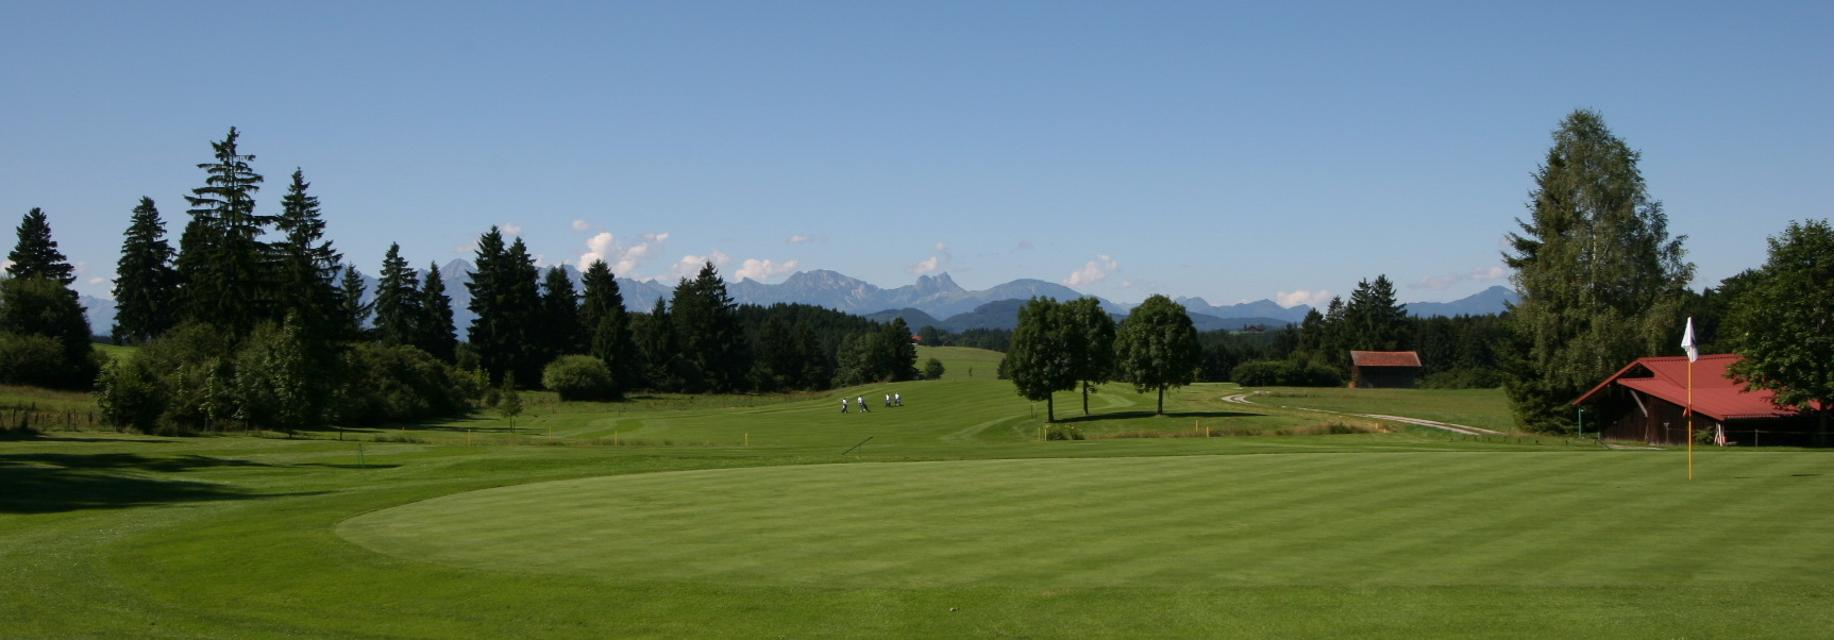 Der Betrachter blickt auf den Golfplatz und dem Alpenpanorama am Horizont.